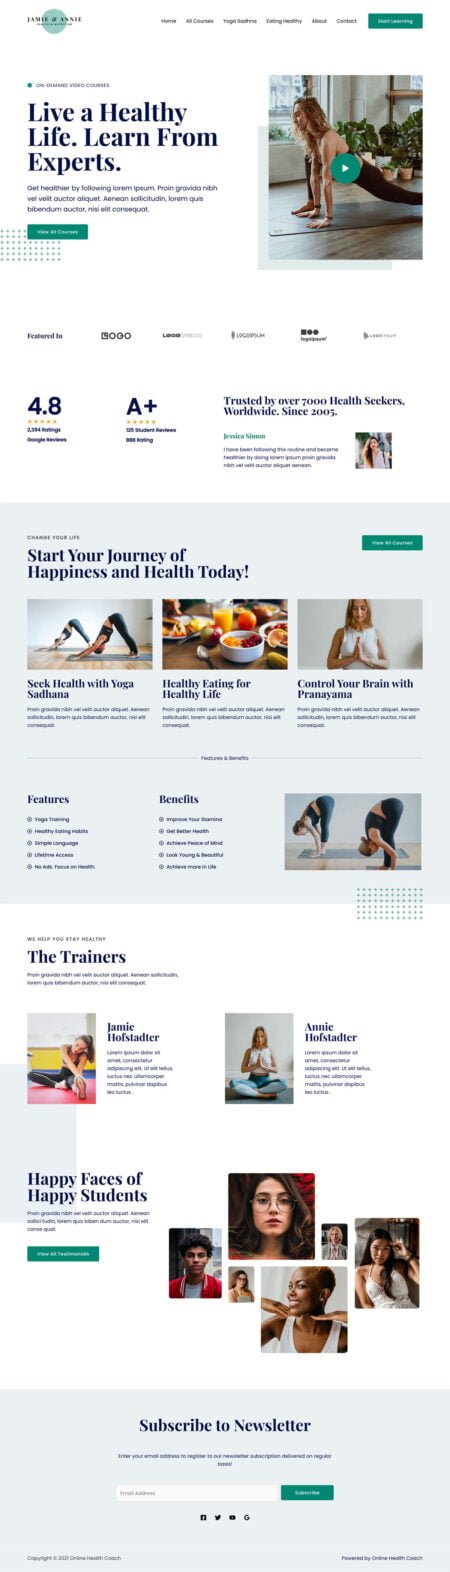 online health coach motyw wordpress